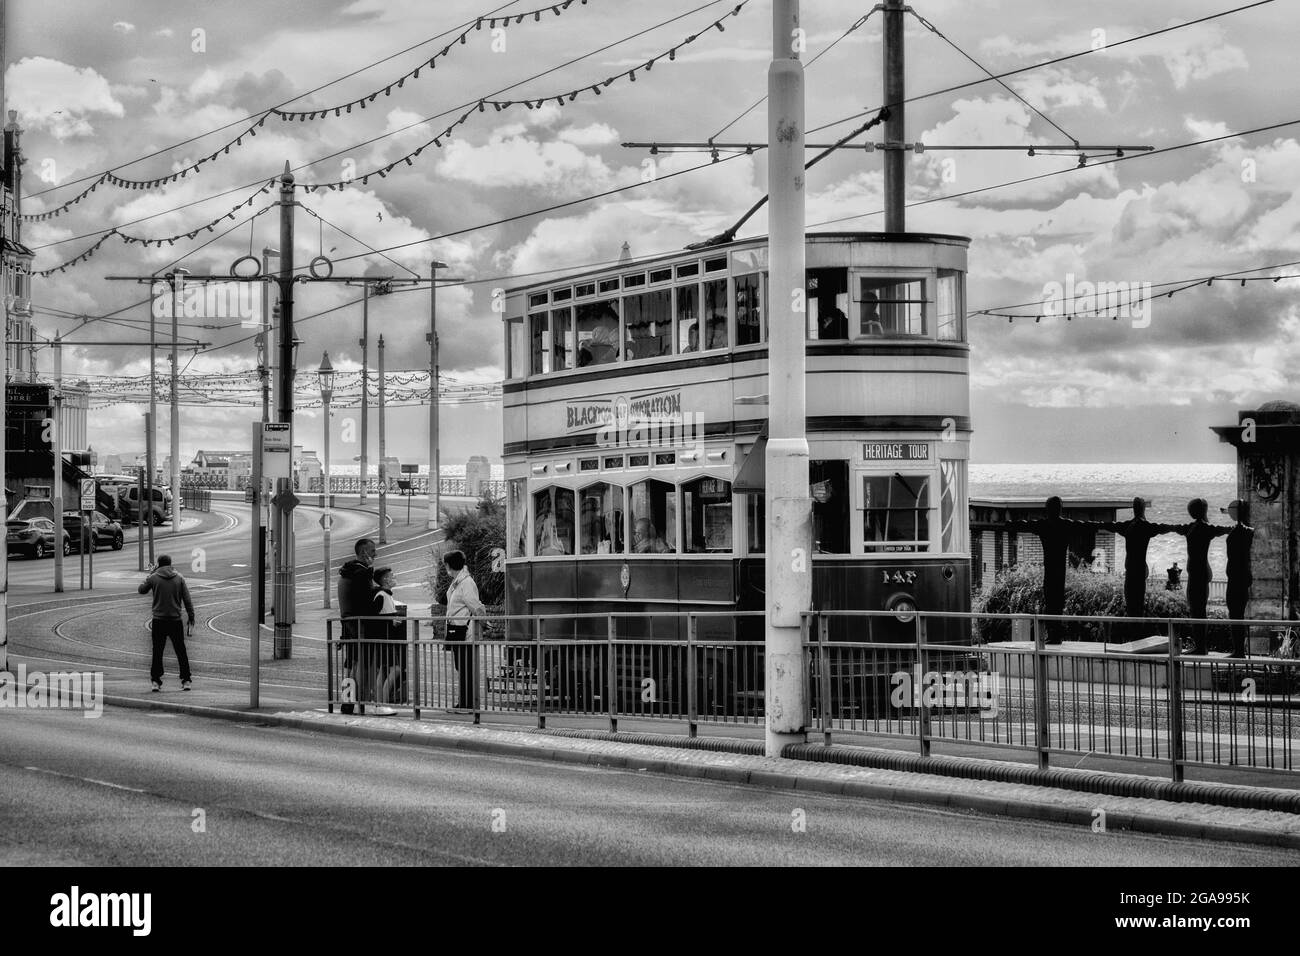 Blackpool Heritage Tram travelling past Gynn Square Stock Photo